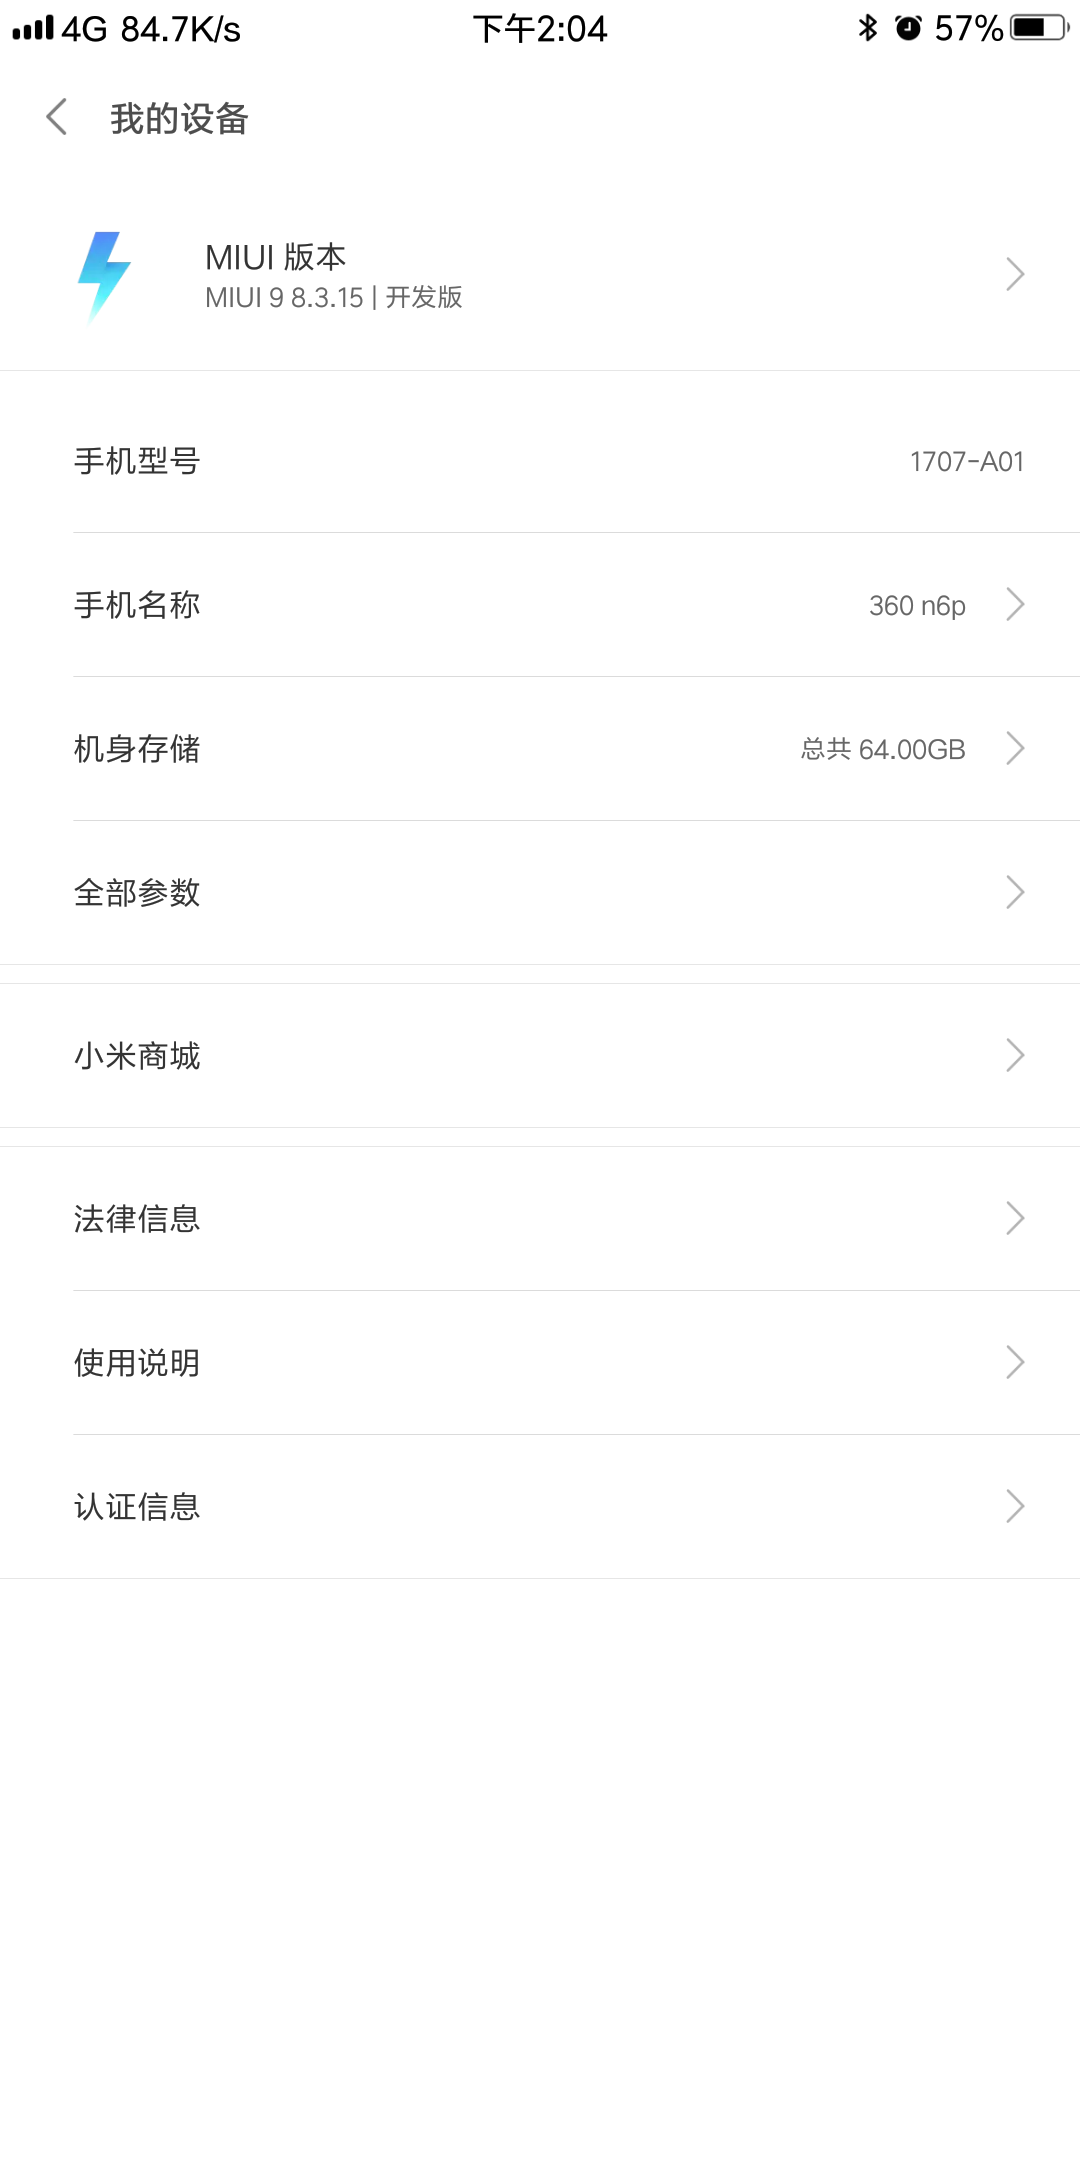 Screenshot_2018-06-05-14-04-07-921_com.android.settings.png